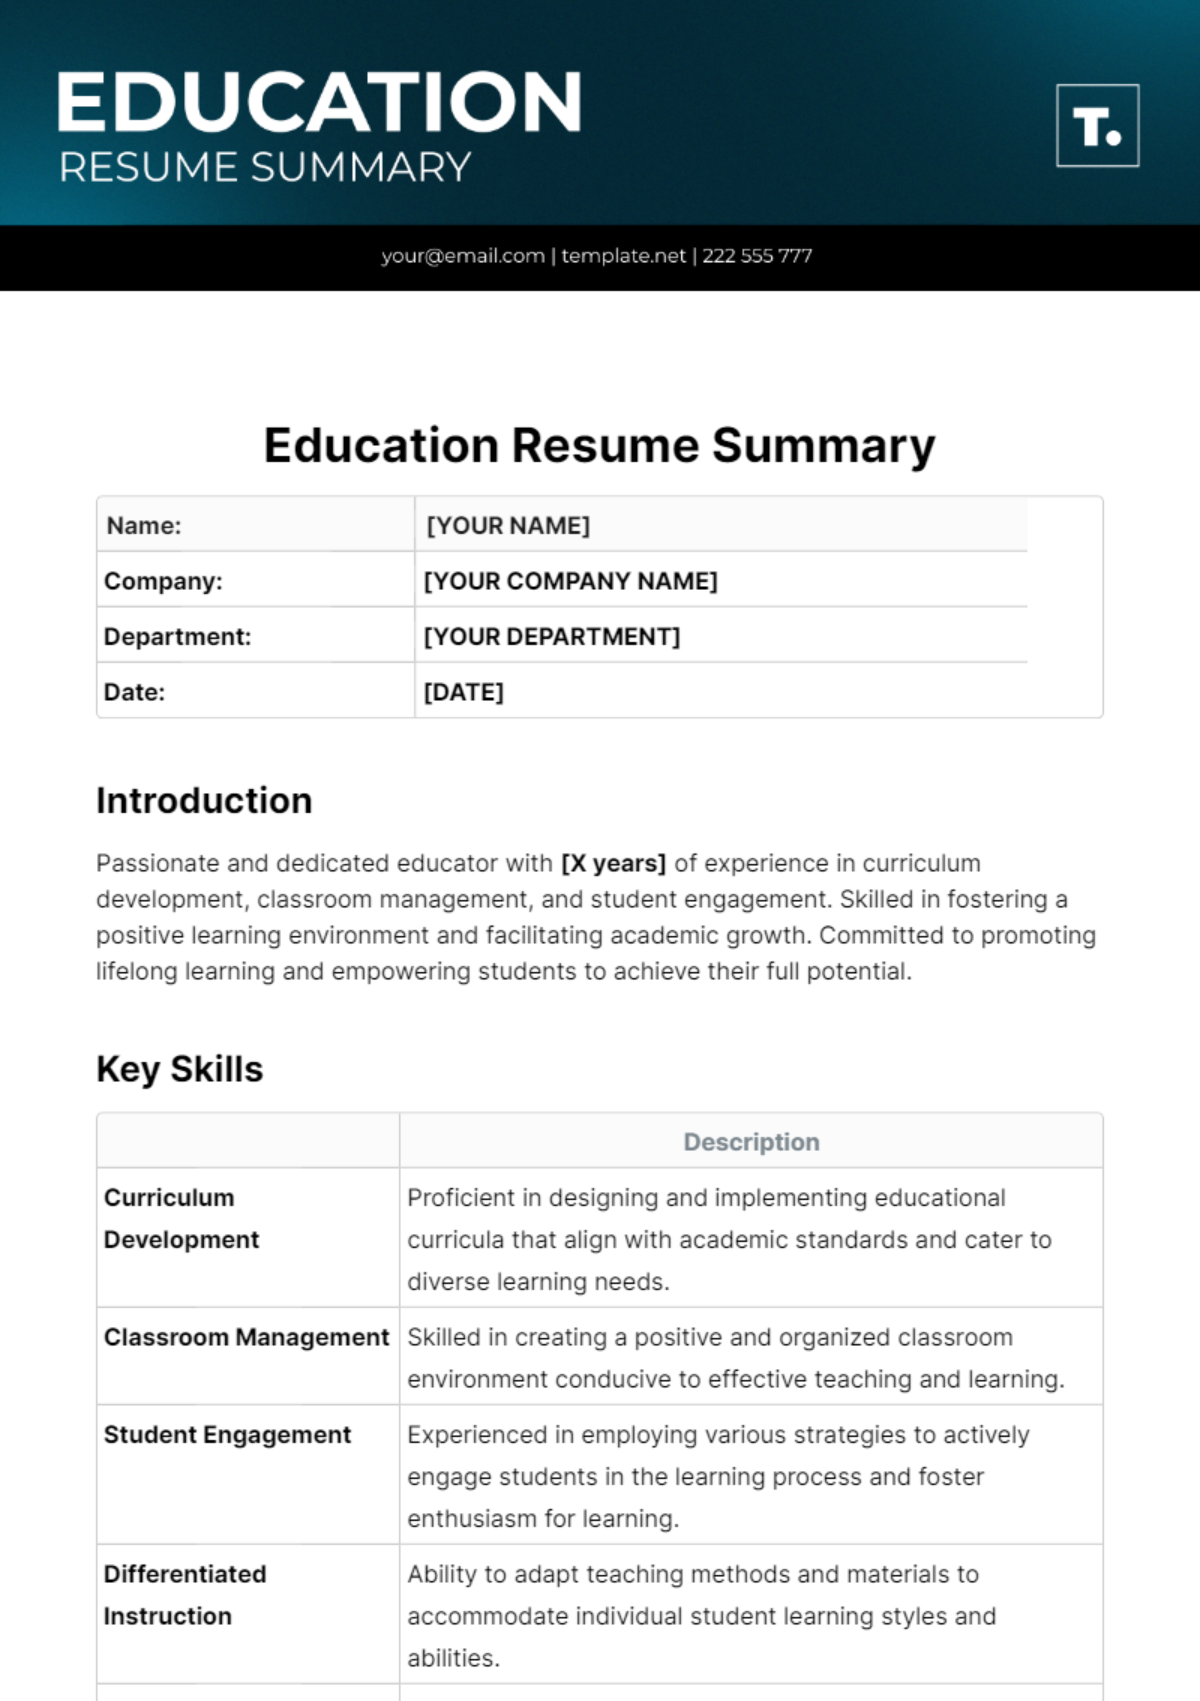 Education Resume Summary Template